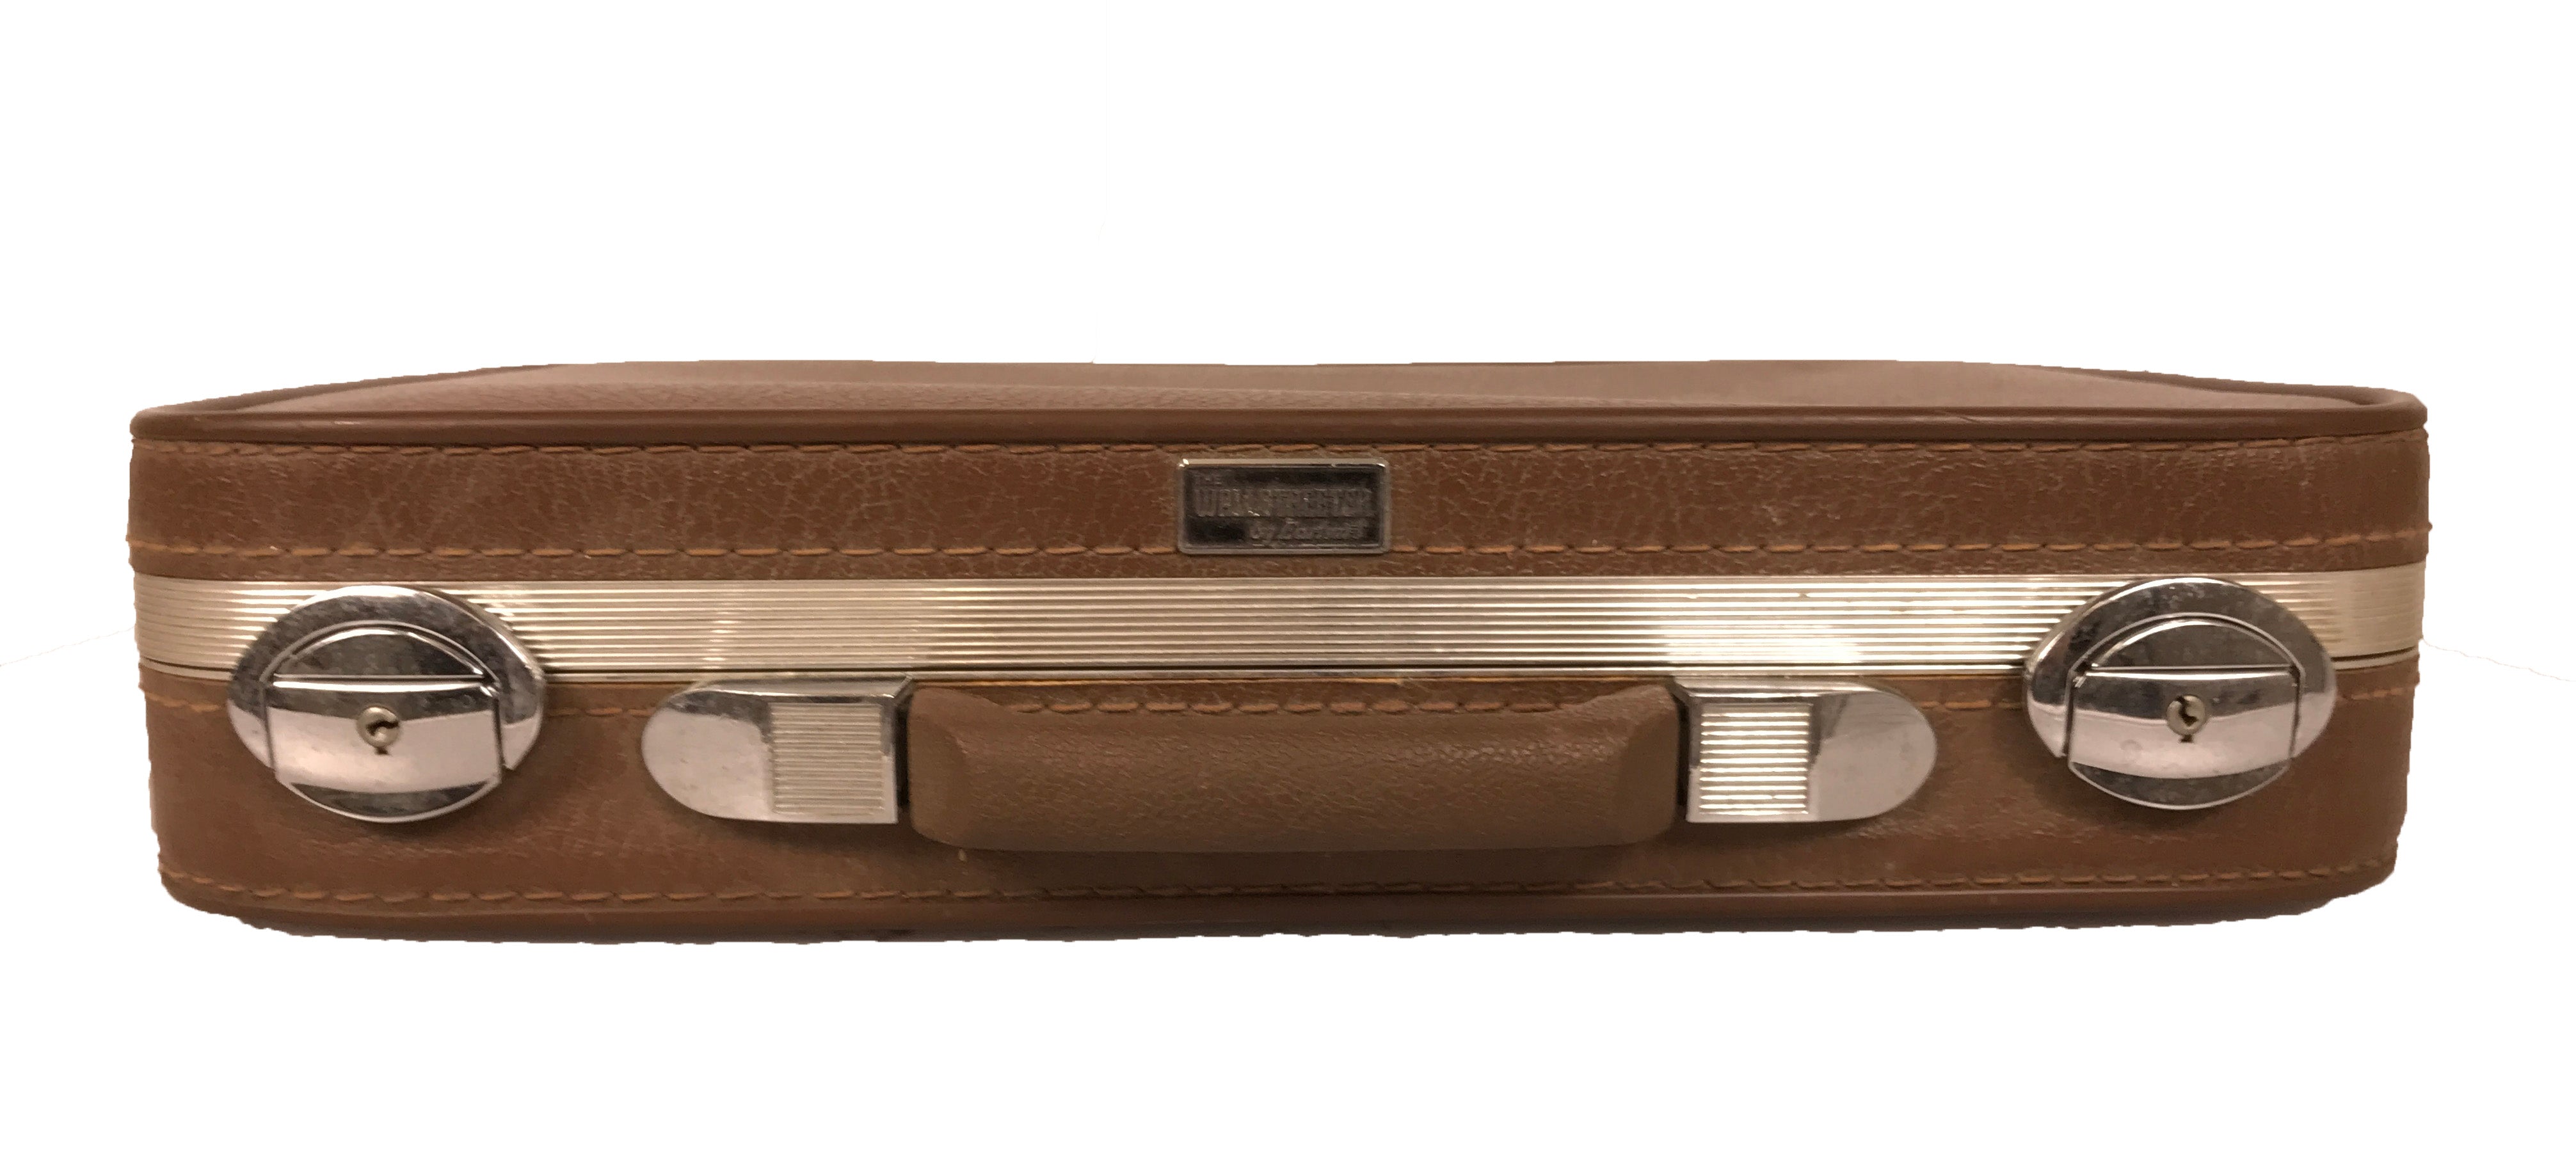 "The Wallstreeter" Earhart Briefcase